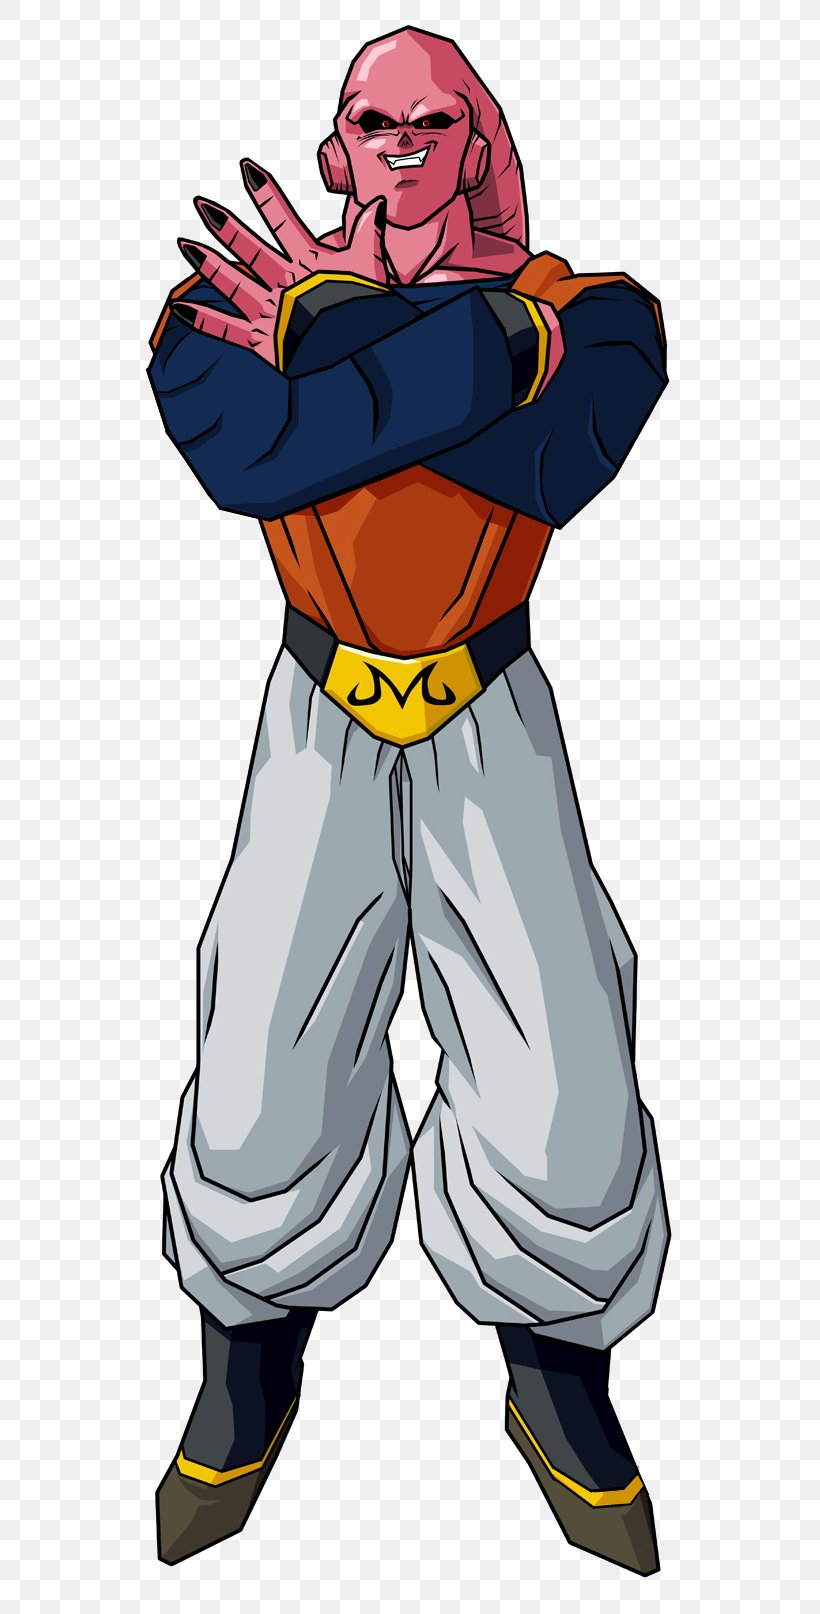 Majin Buu Goku Trunks Vegeta Gotenks, majin boo dragon ball super, trunks,  cartoon, fictional Character png